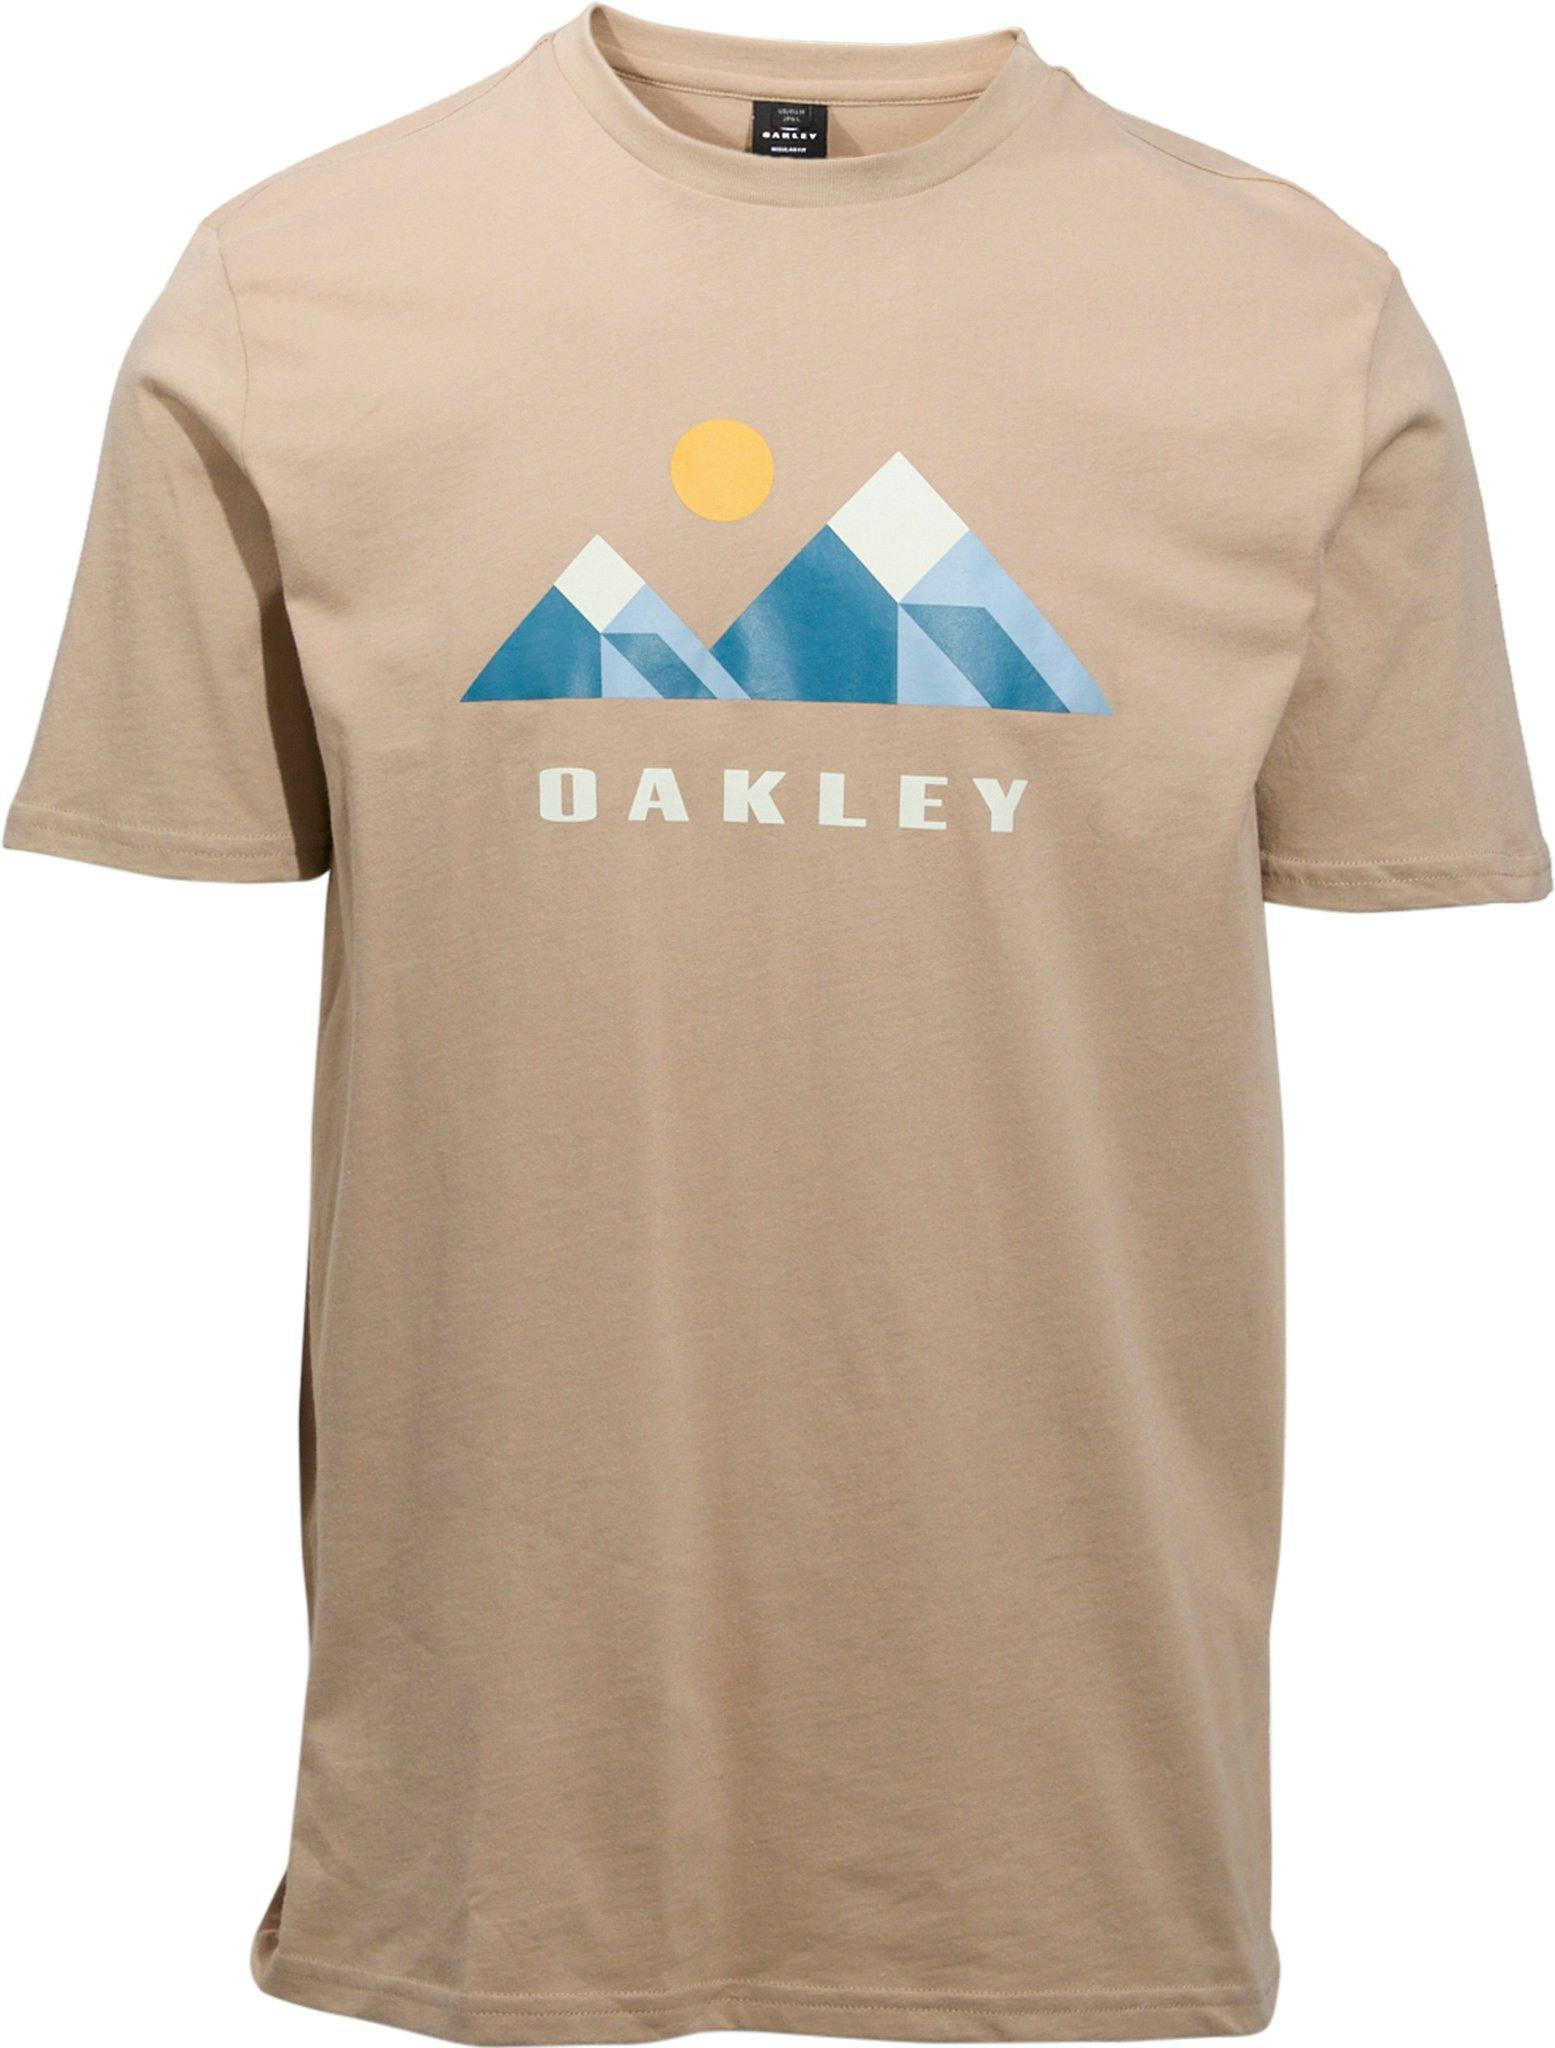 Product image for Fractual Peaks T-shirt - Men's